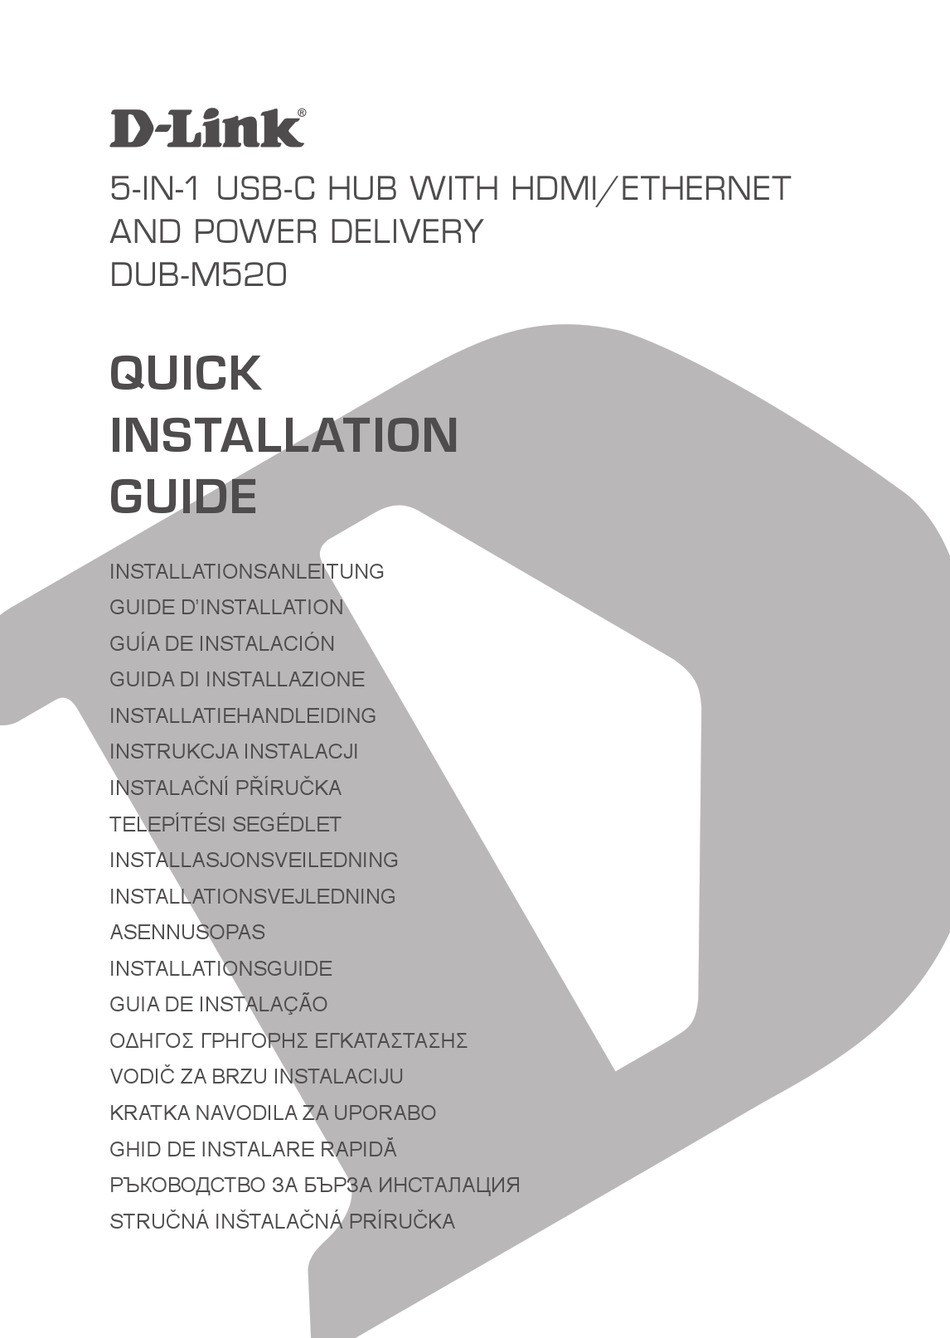 D-LINK DUB-M520 QUICK INSTALLATION MANUAL Pdf Download | ManualsLib